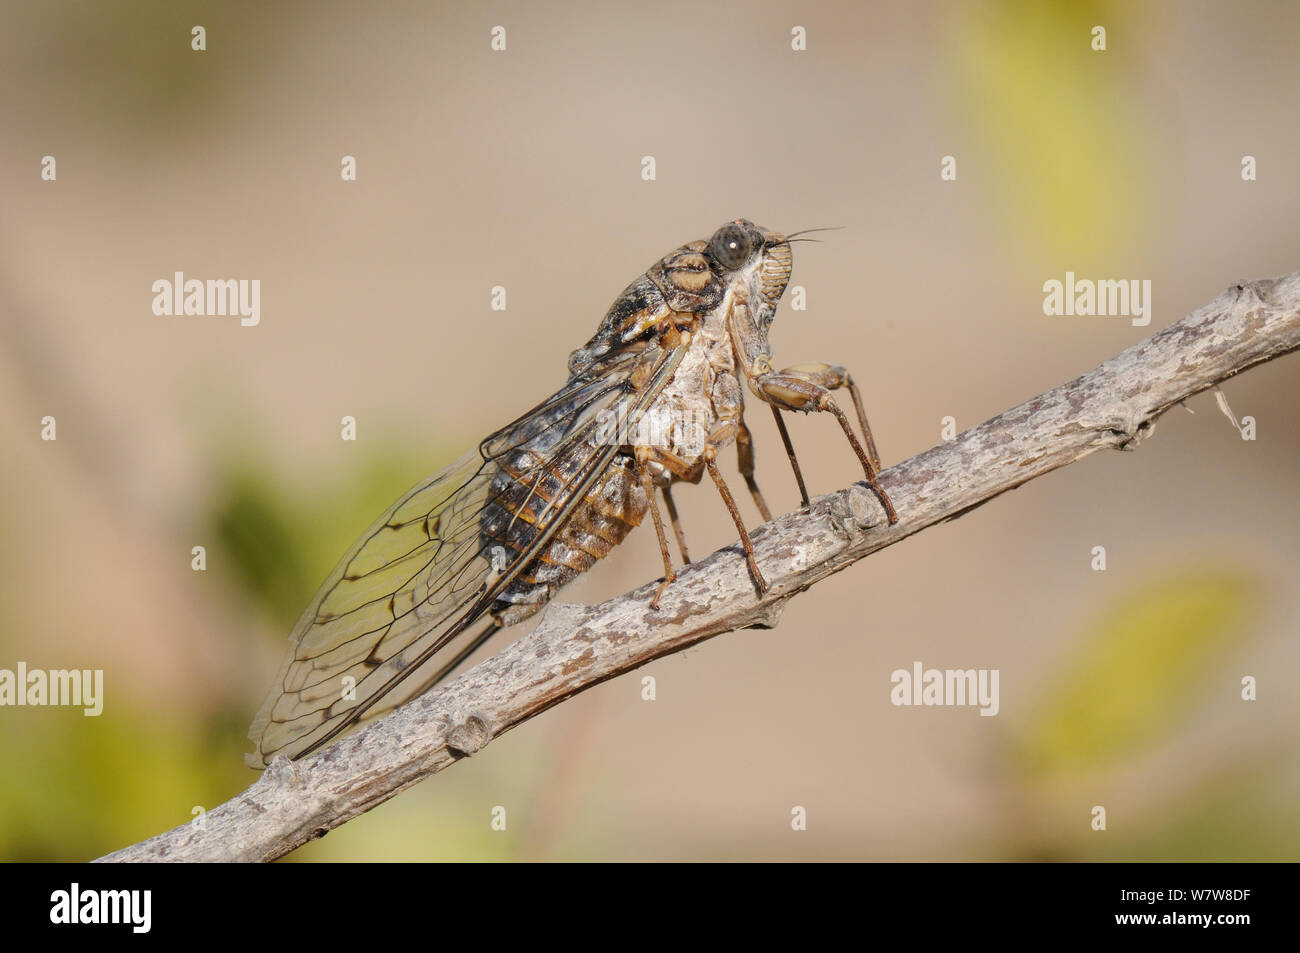 Grey cicada (Cicada orni) probing a twig with its stylet, Kilada, Peloponnese, Greece, August. Stock Photo